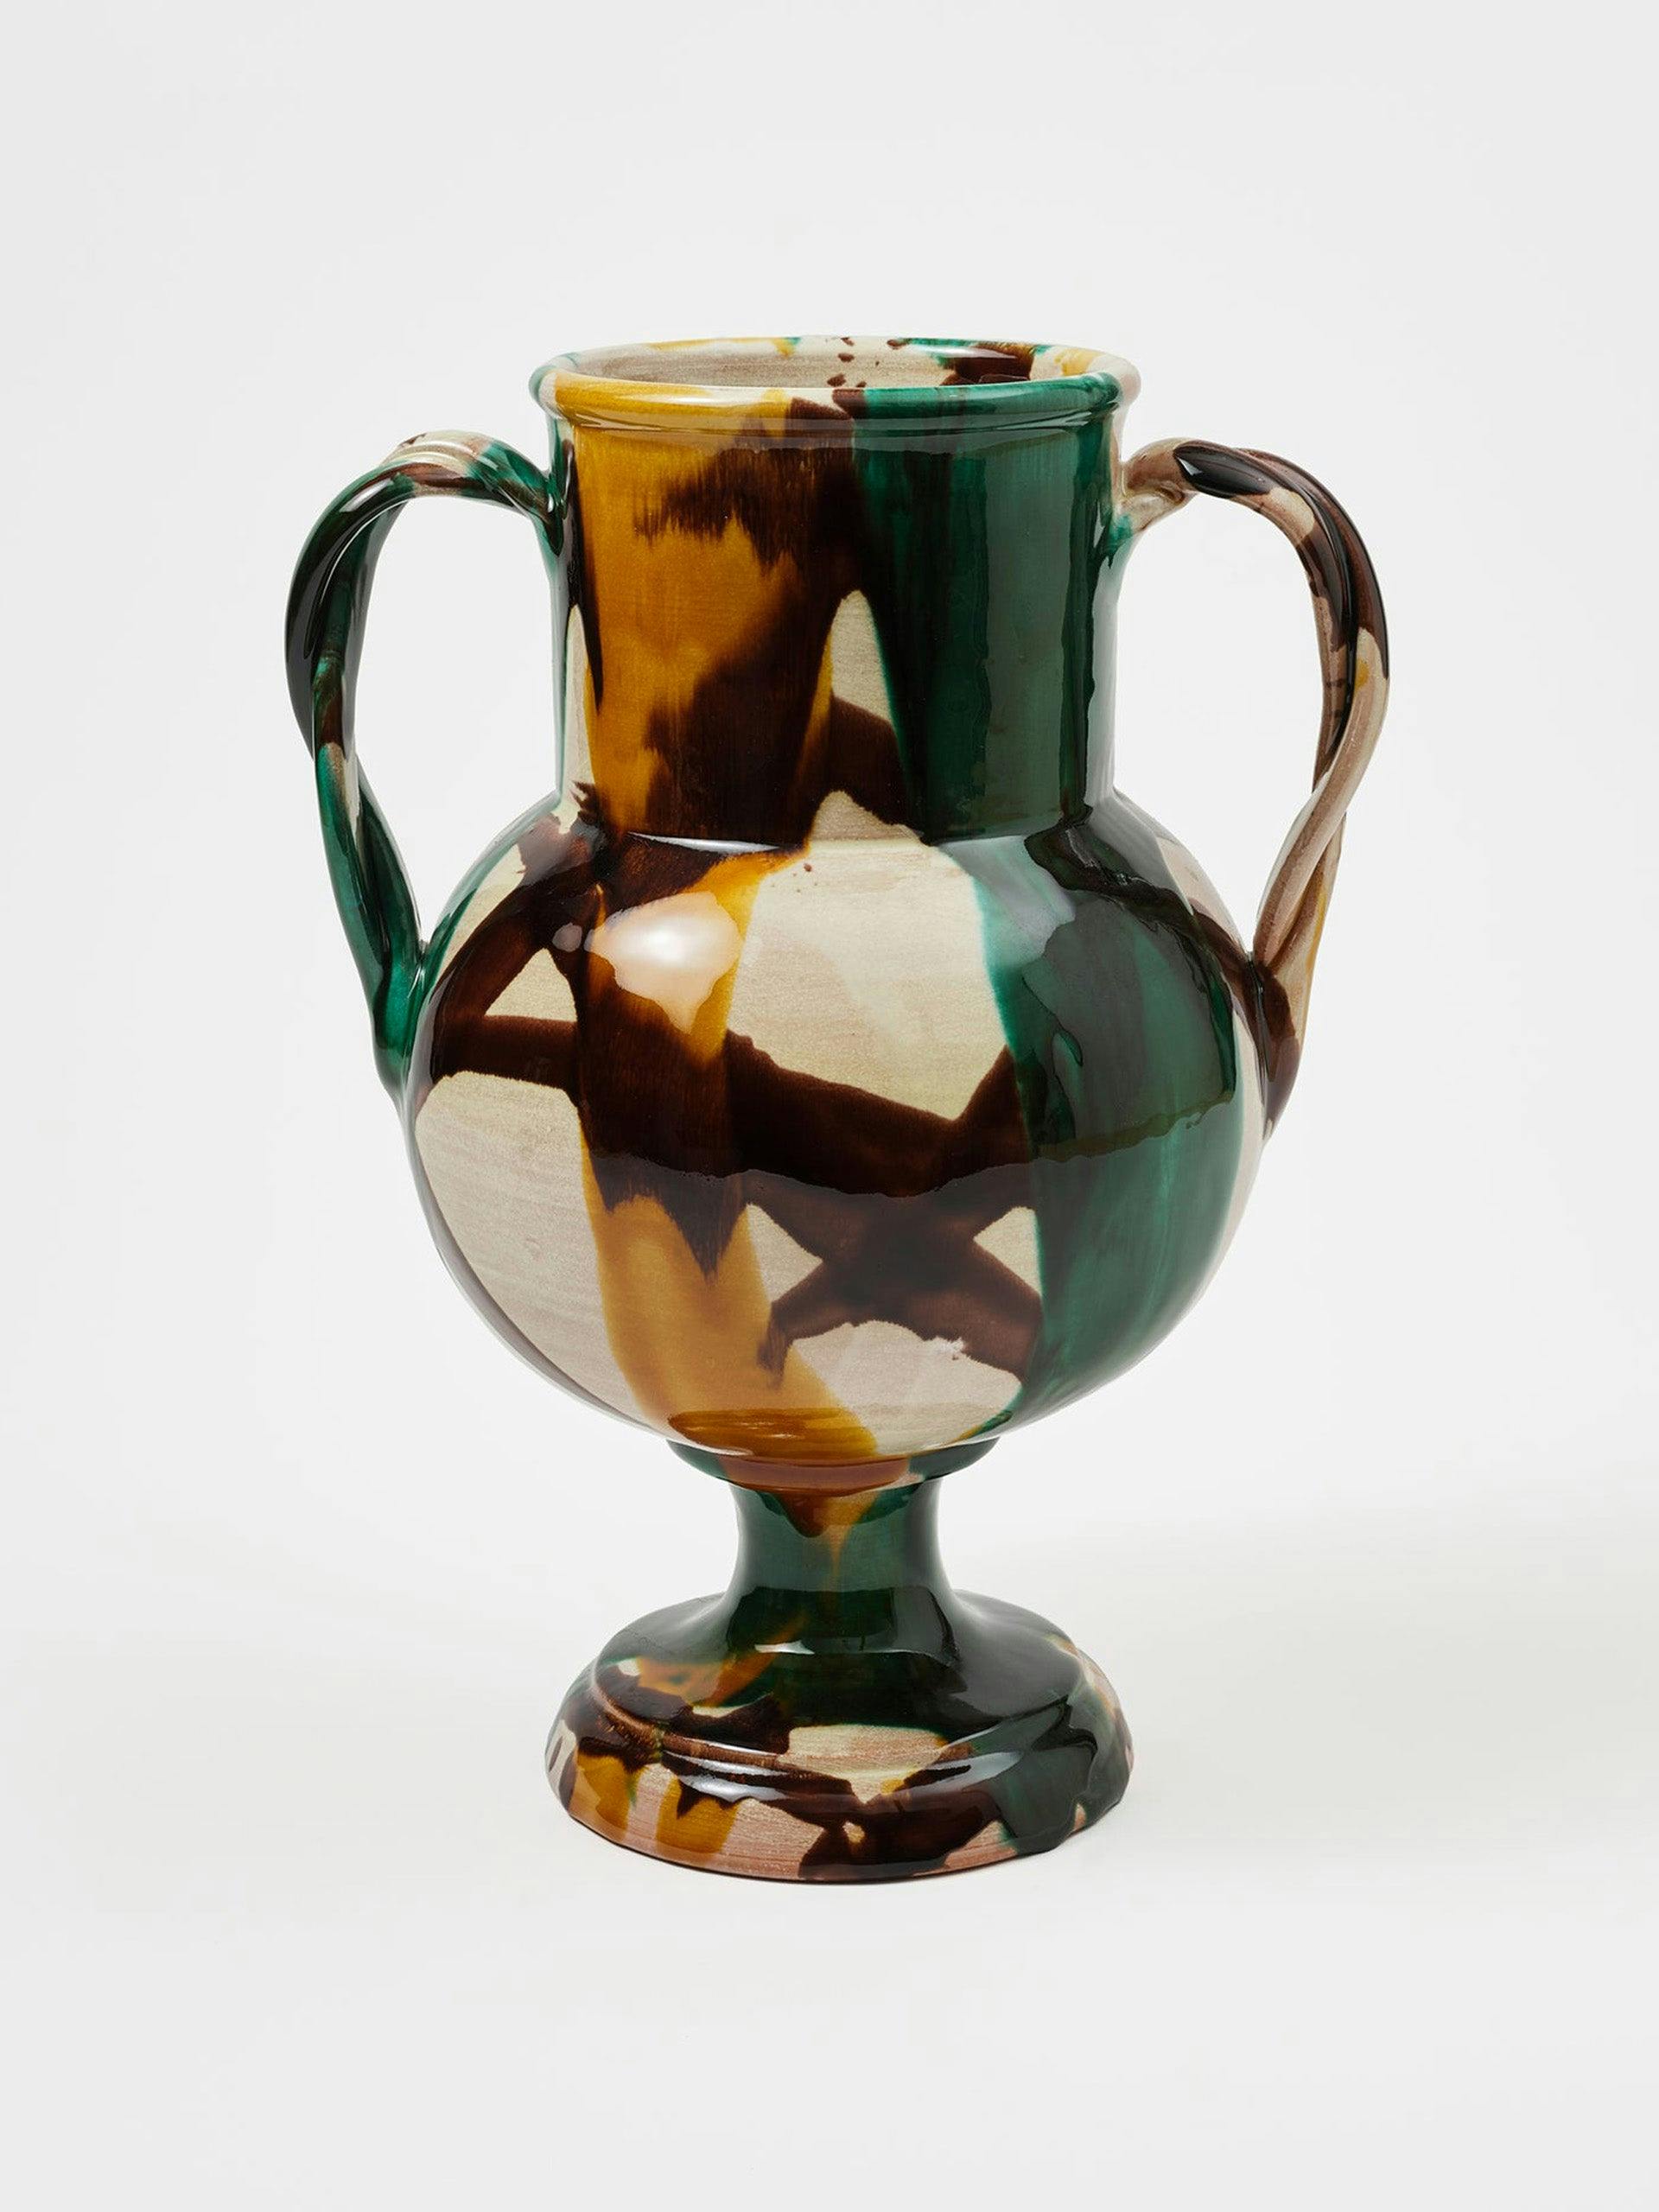 Apulia striped amphora vase